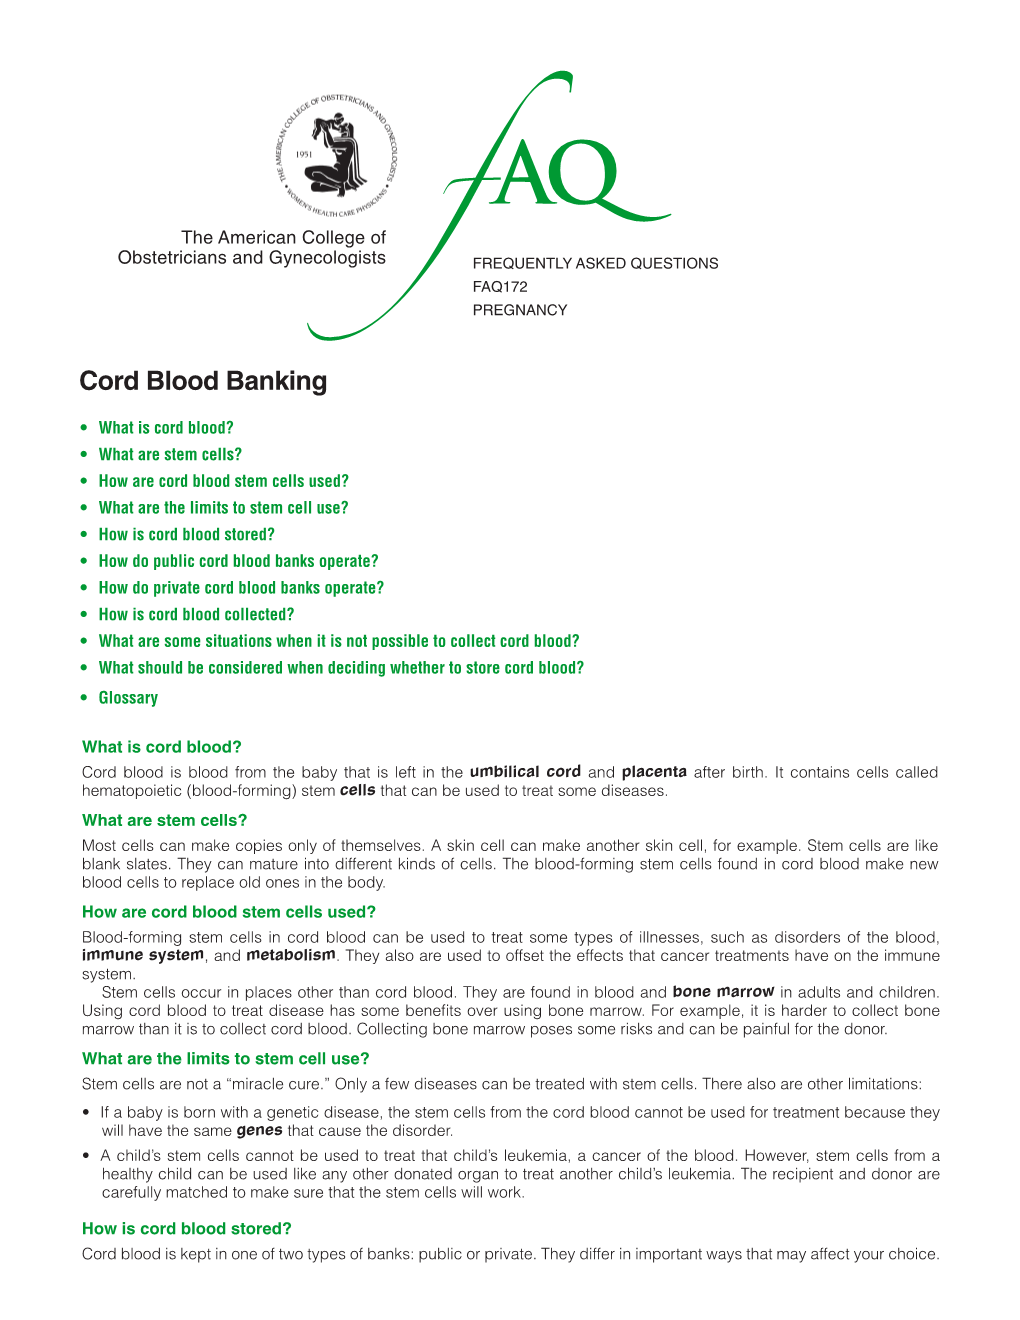 FAQ172 -- Cord Blood Banking